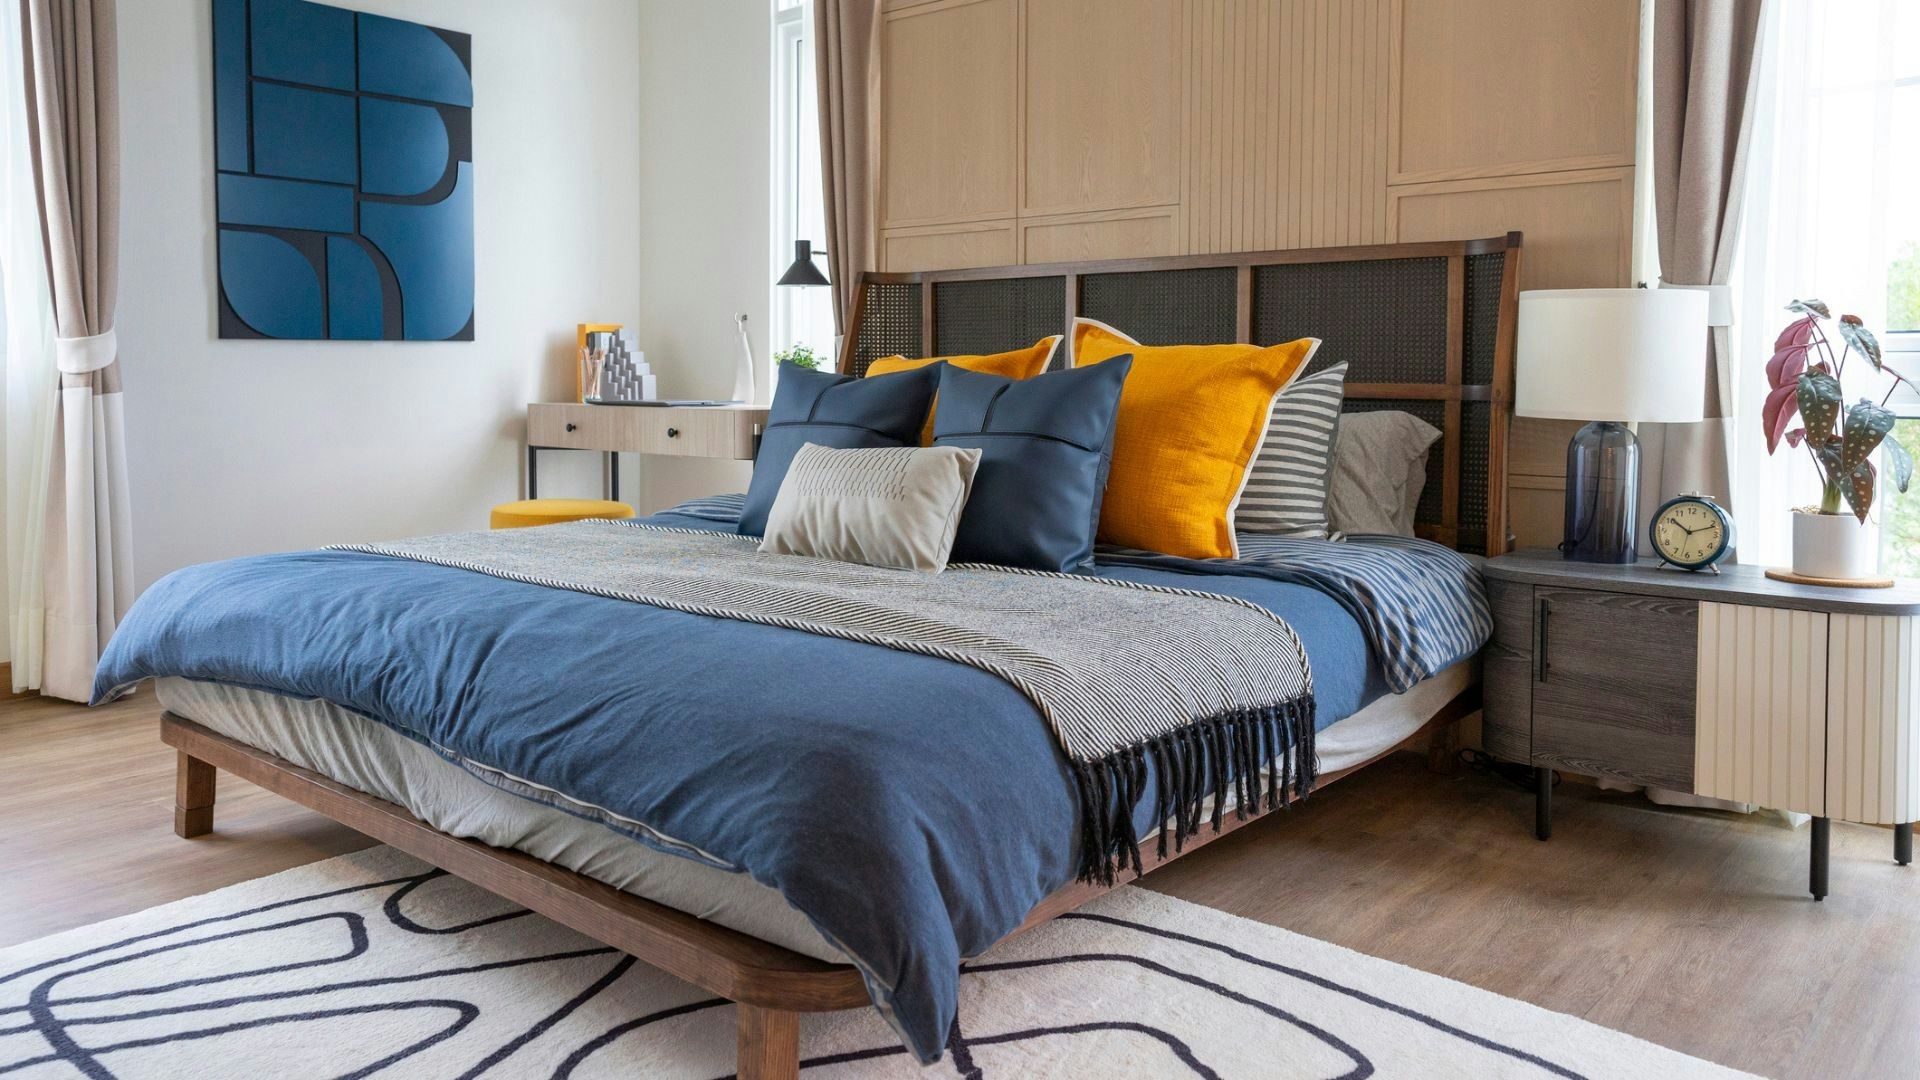 Navy bedroom ideas: Navy bed with navy bedding